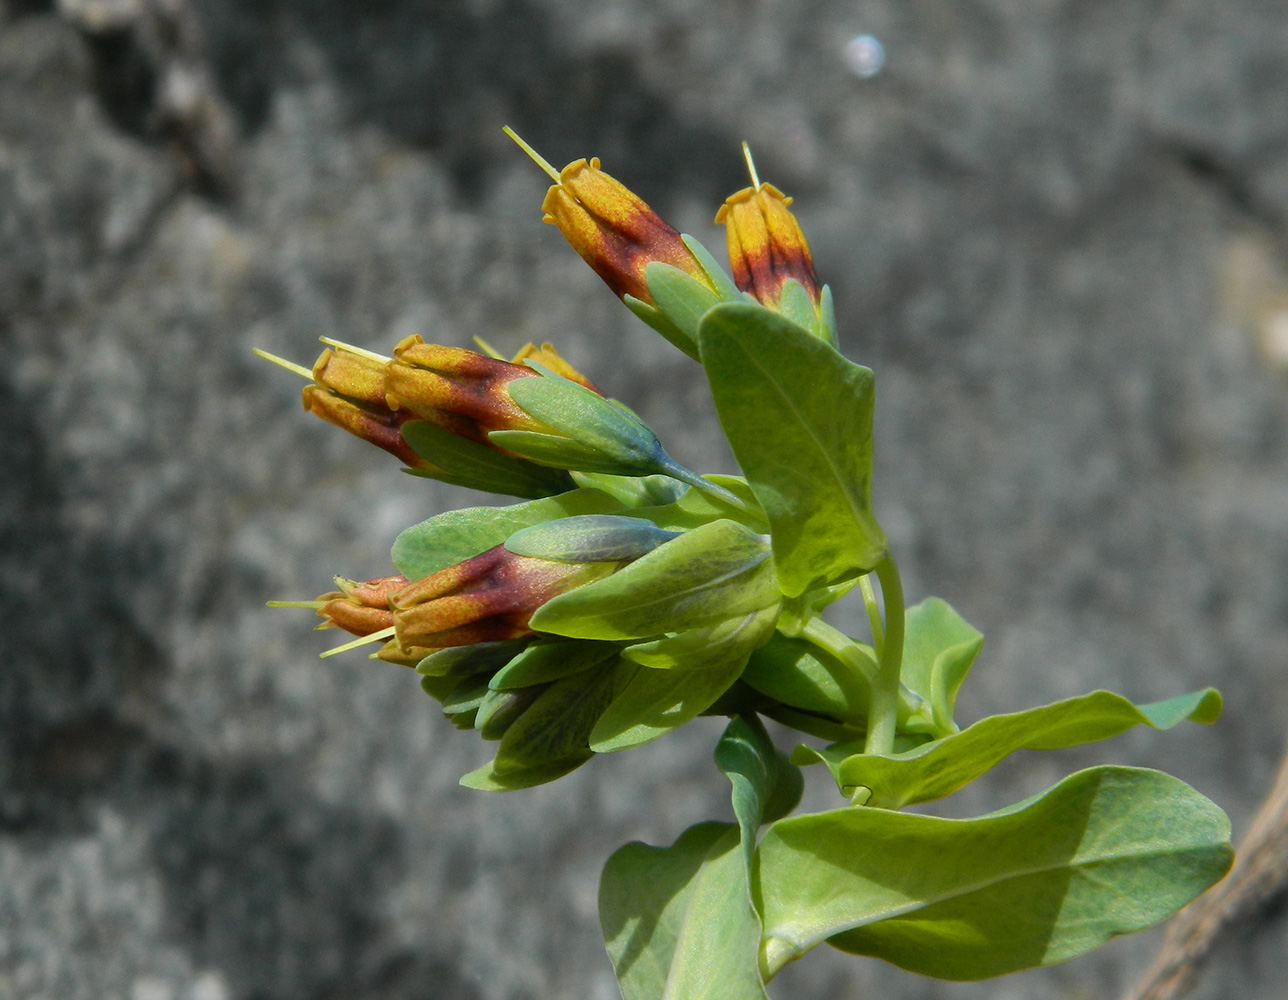 Image of Cerinthe glabra ssp. caucasica specimen.